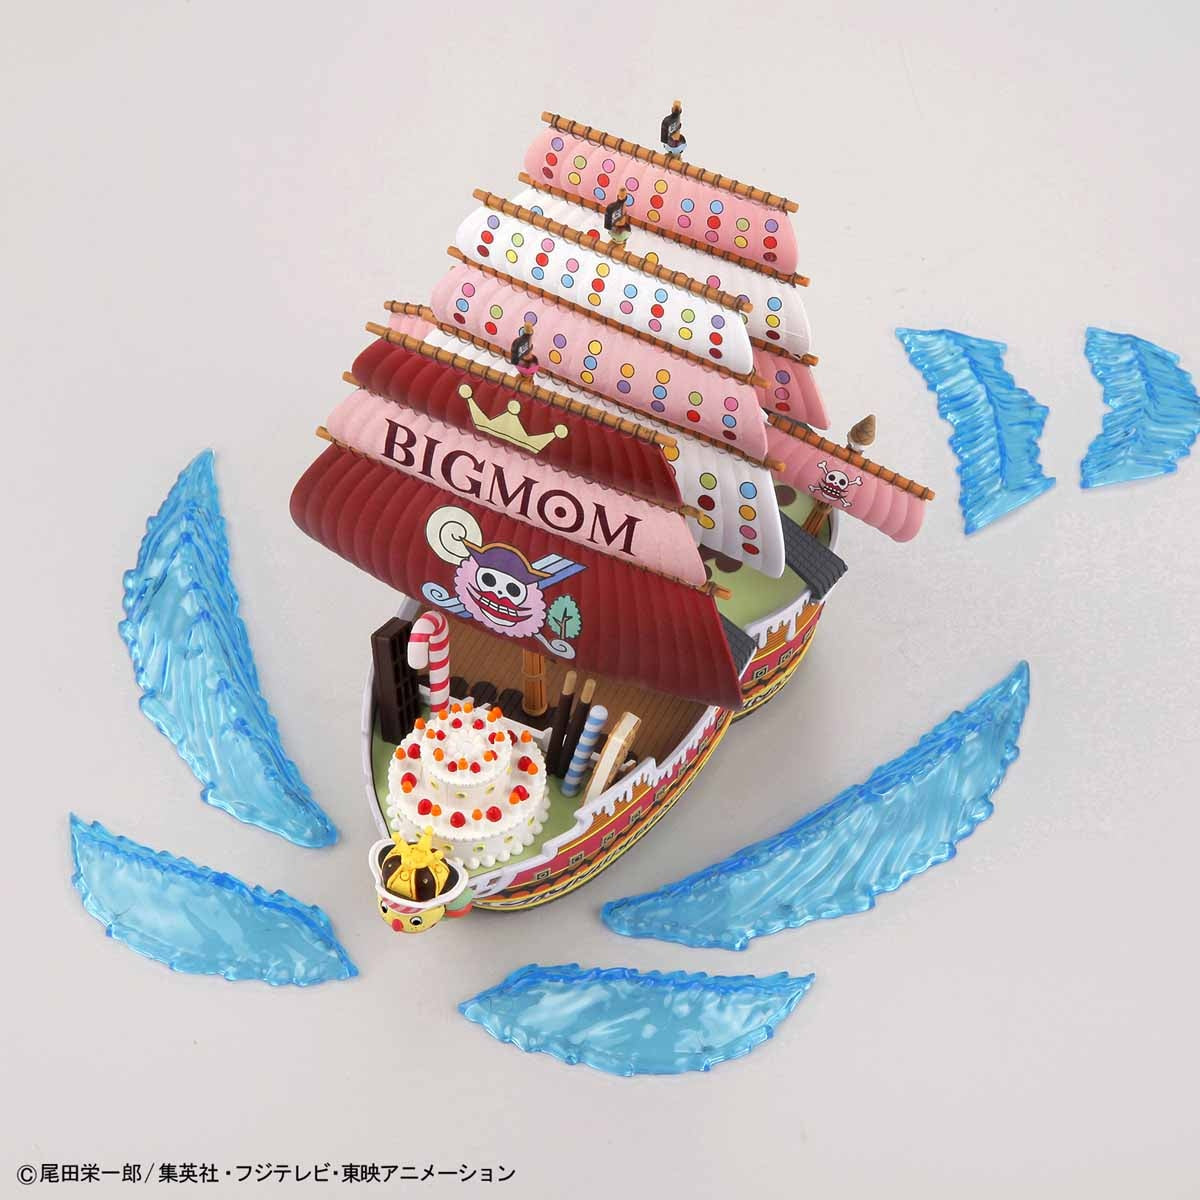 One Piece Grand Ship Collection Queen Mama Chanter-Bandai-Ace Cards &amp; Collectibles